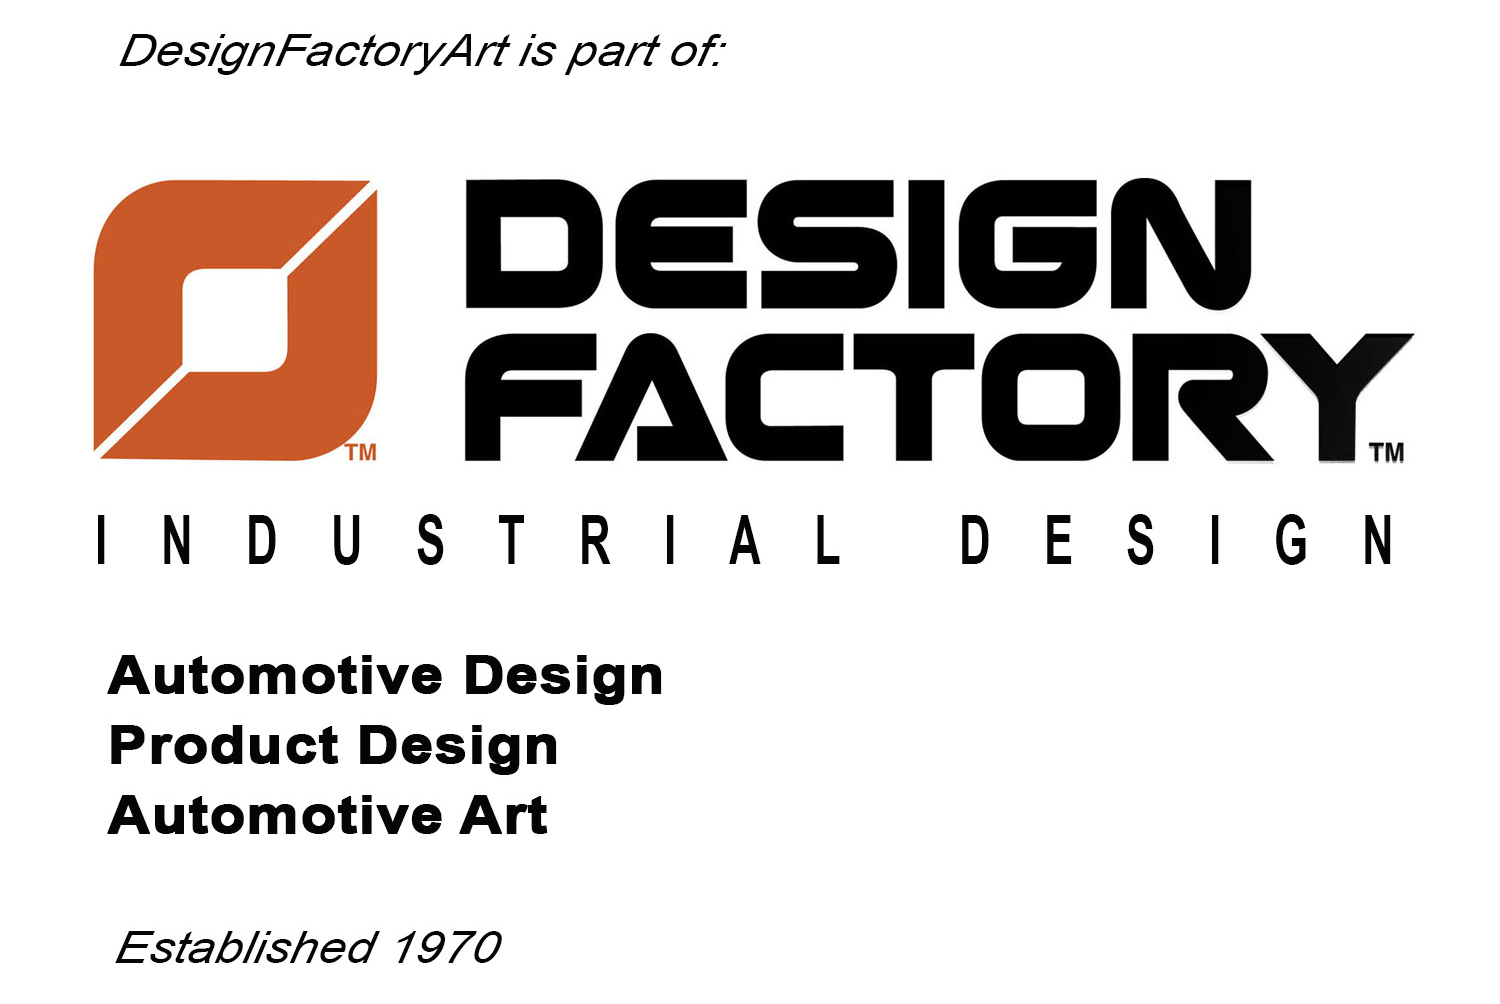 Industrial Design - Design Factory Art by Jim Gerdom